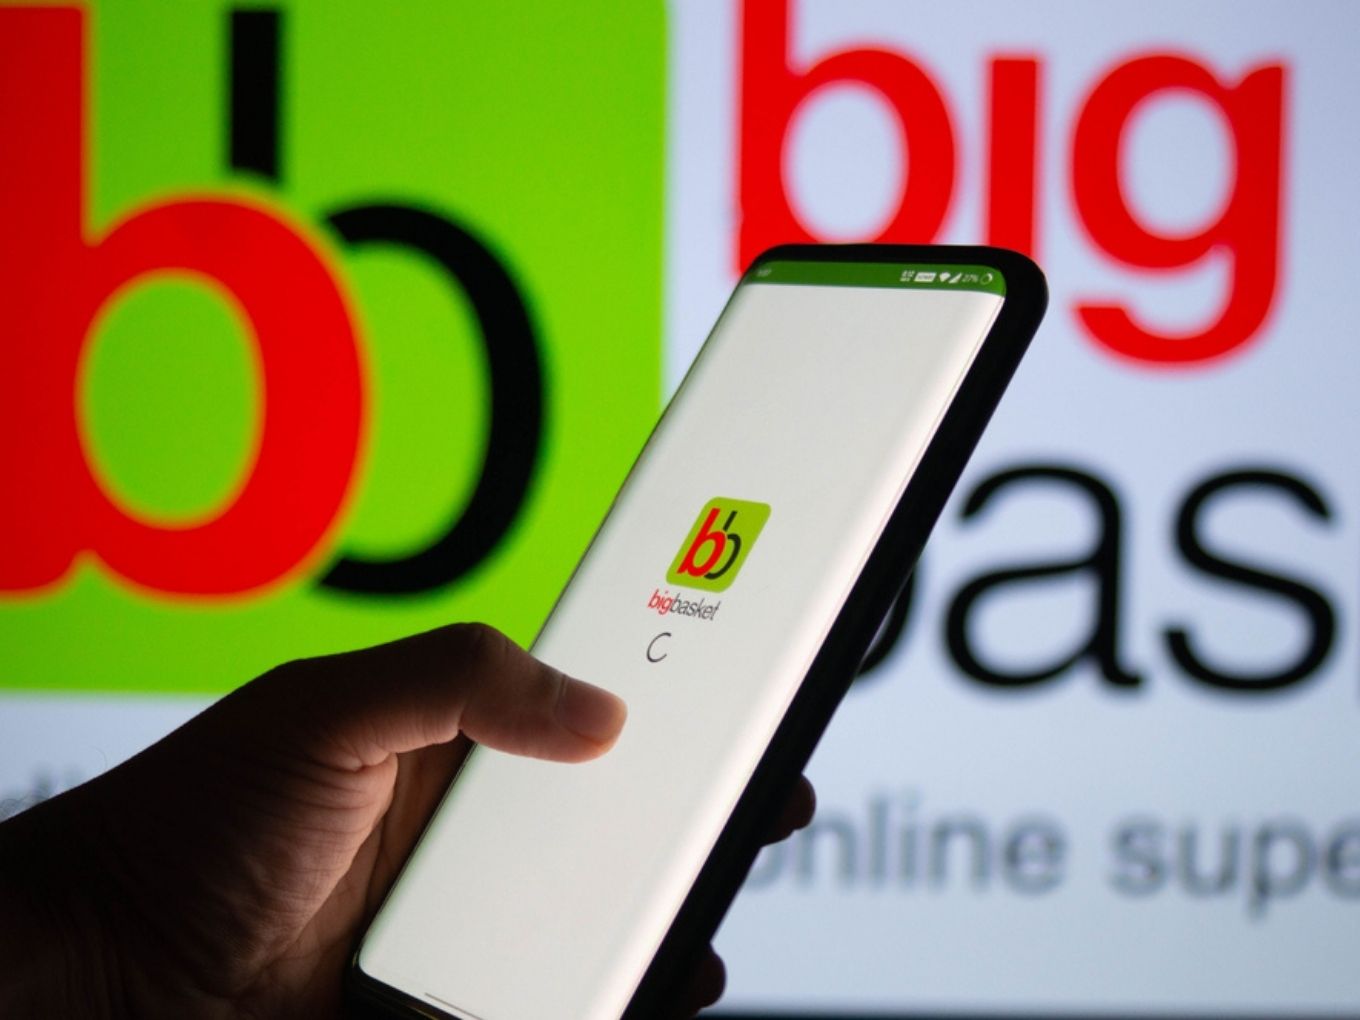 Tata's $1 Bn Acquisition Of BigBasket Gets CCI Green Light